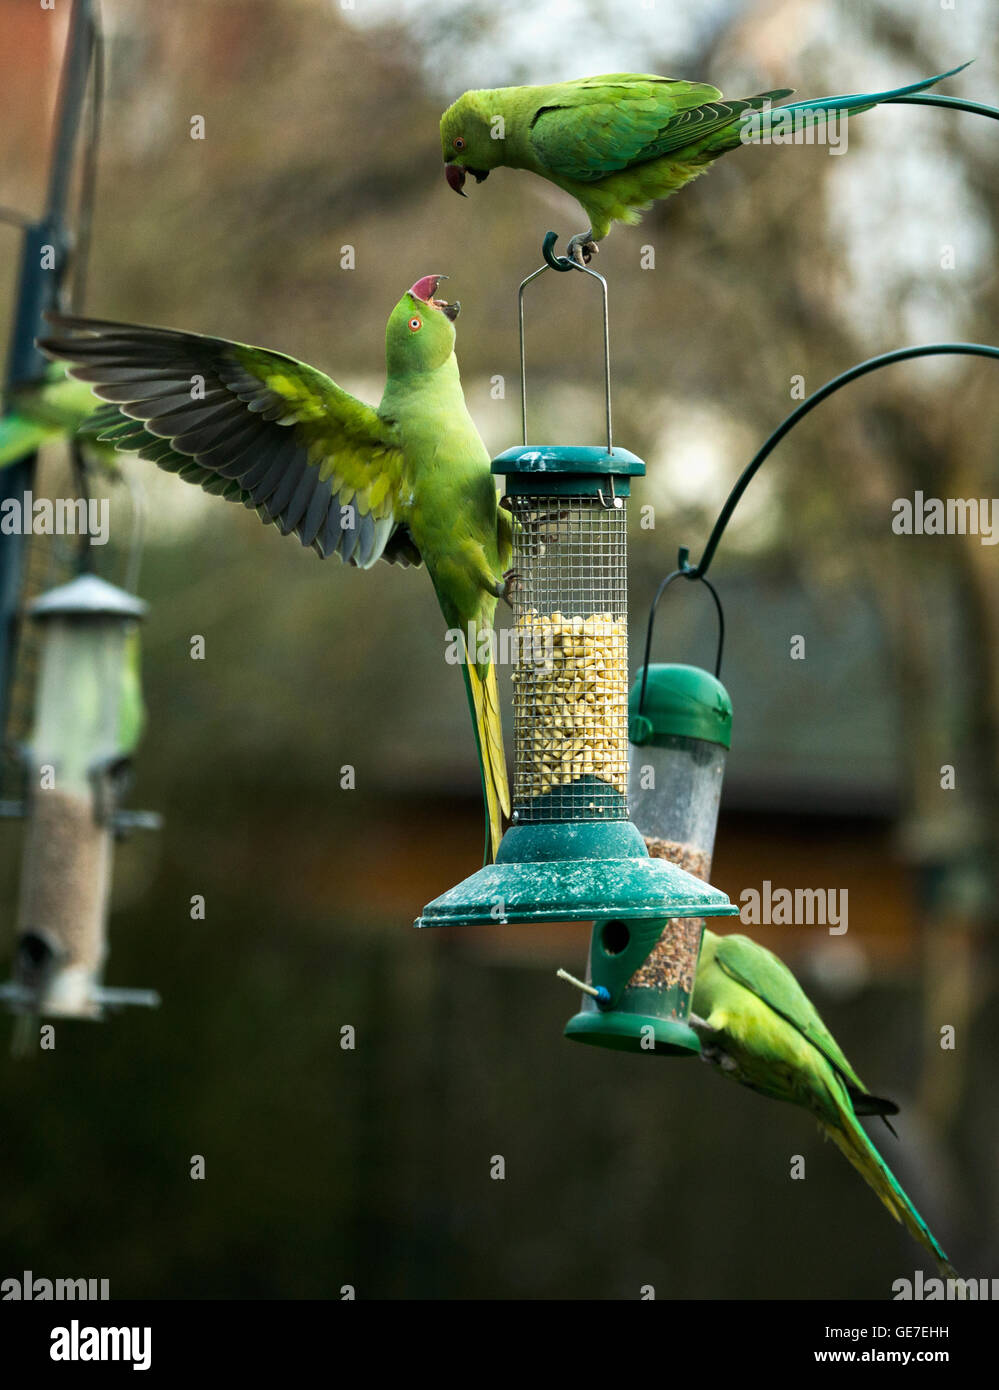 Rose-ringed or ring-necked parakeet (Psittacula krameri) on bird feeders in urban garden.  London, UK. Stock Photo